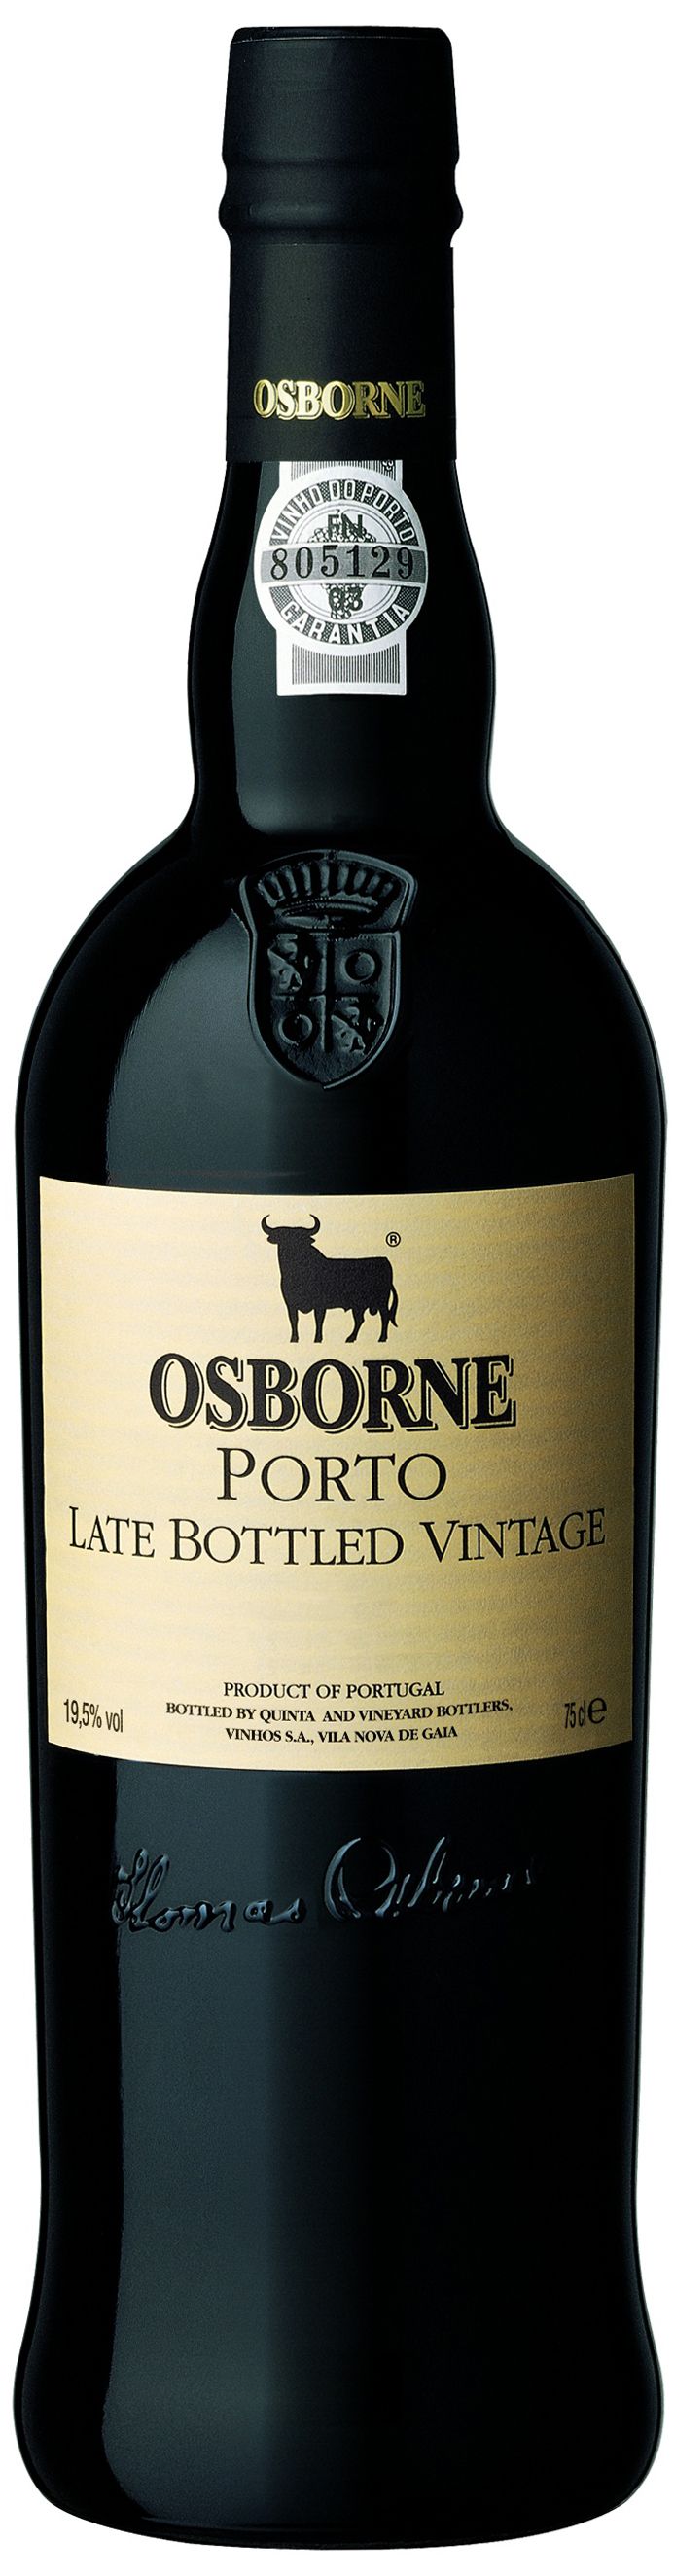 Quinta And Vineyard, Osborne Porto Late Bottled Vintage, 2000